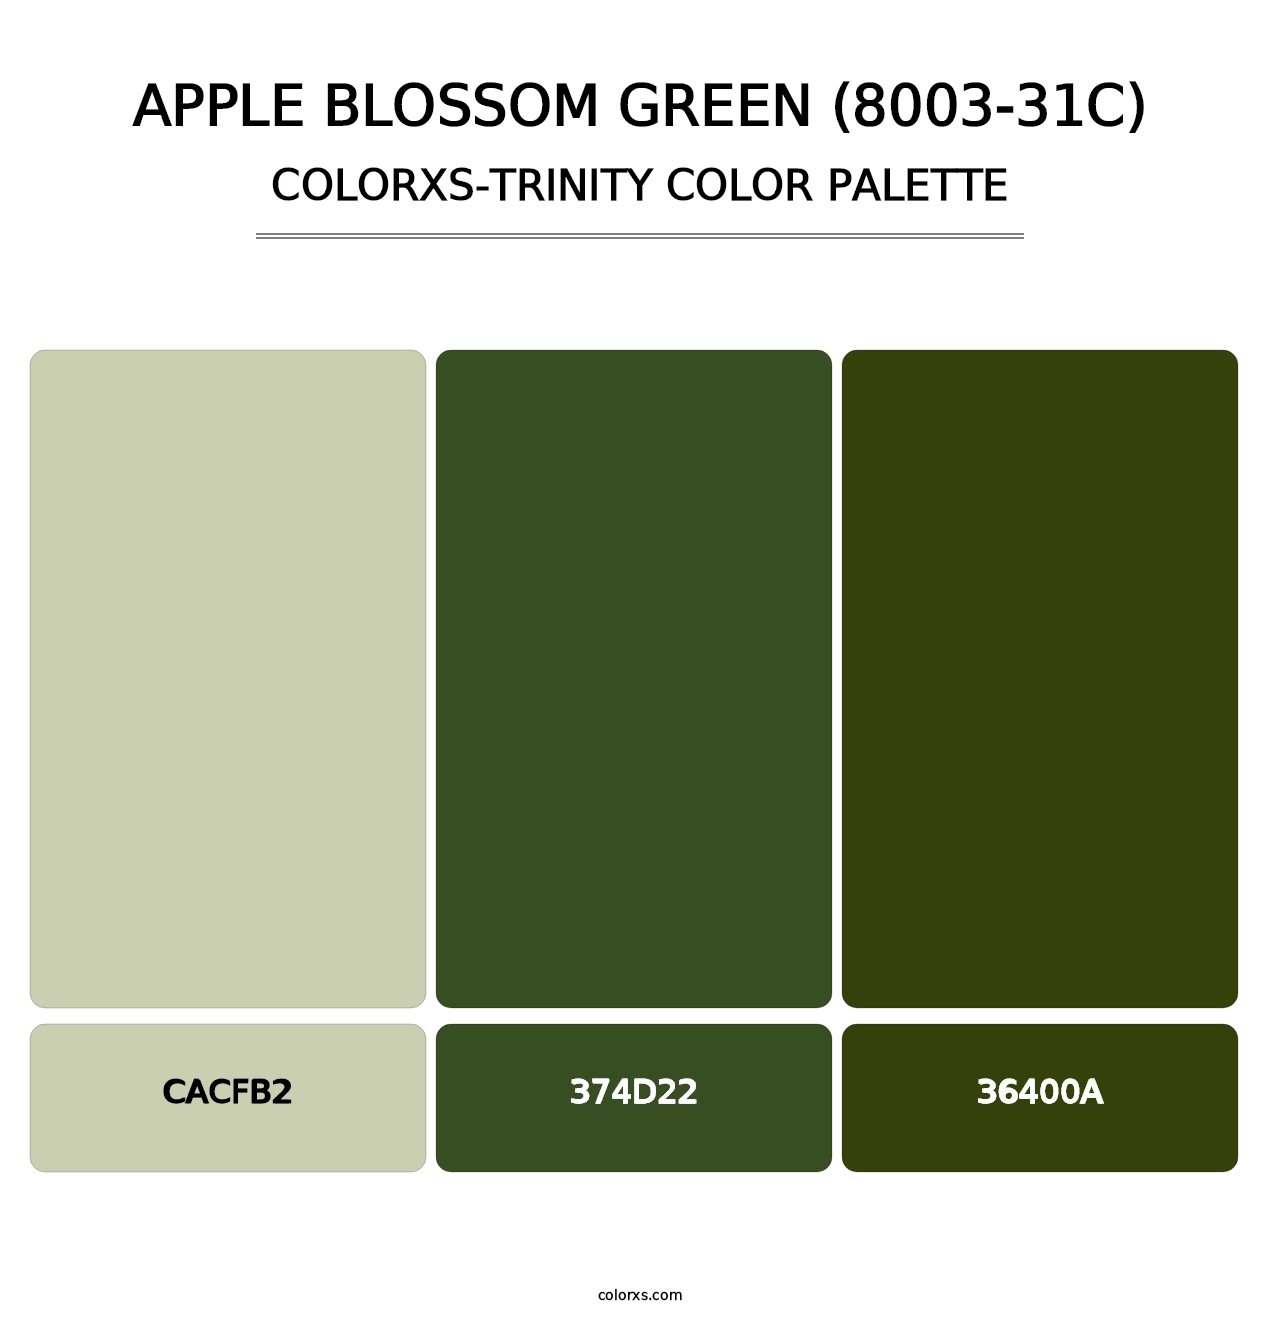 Apple Blossom Green (8003-31C) - Colorxs Trinity Palette